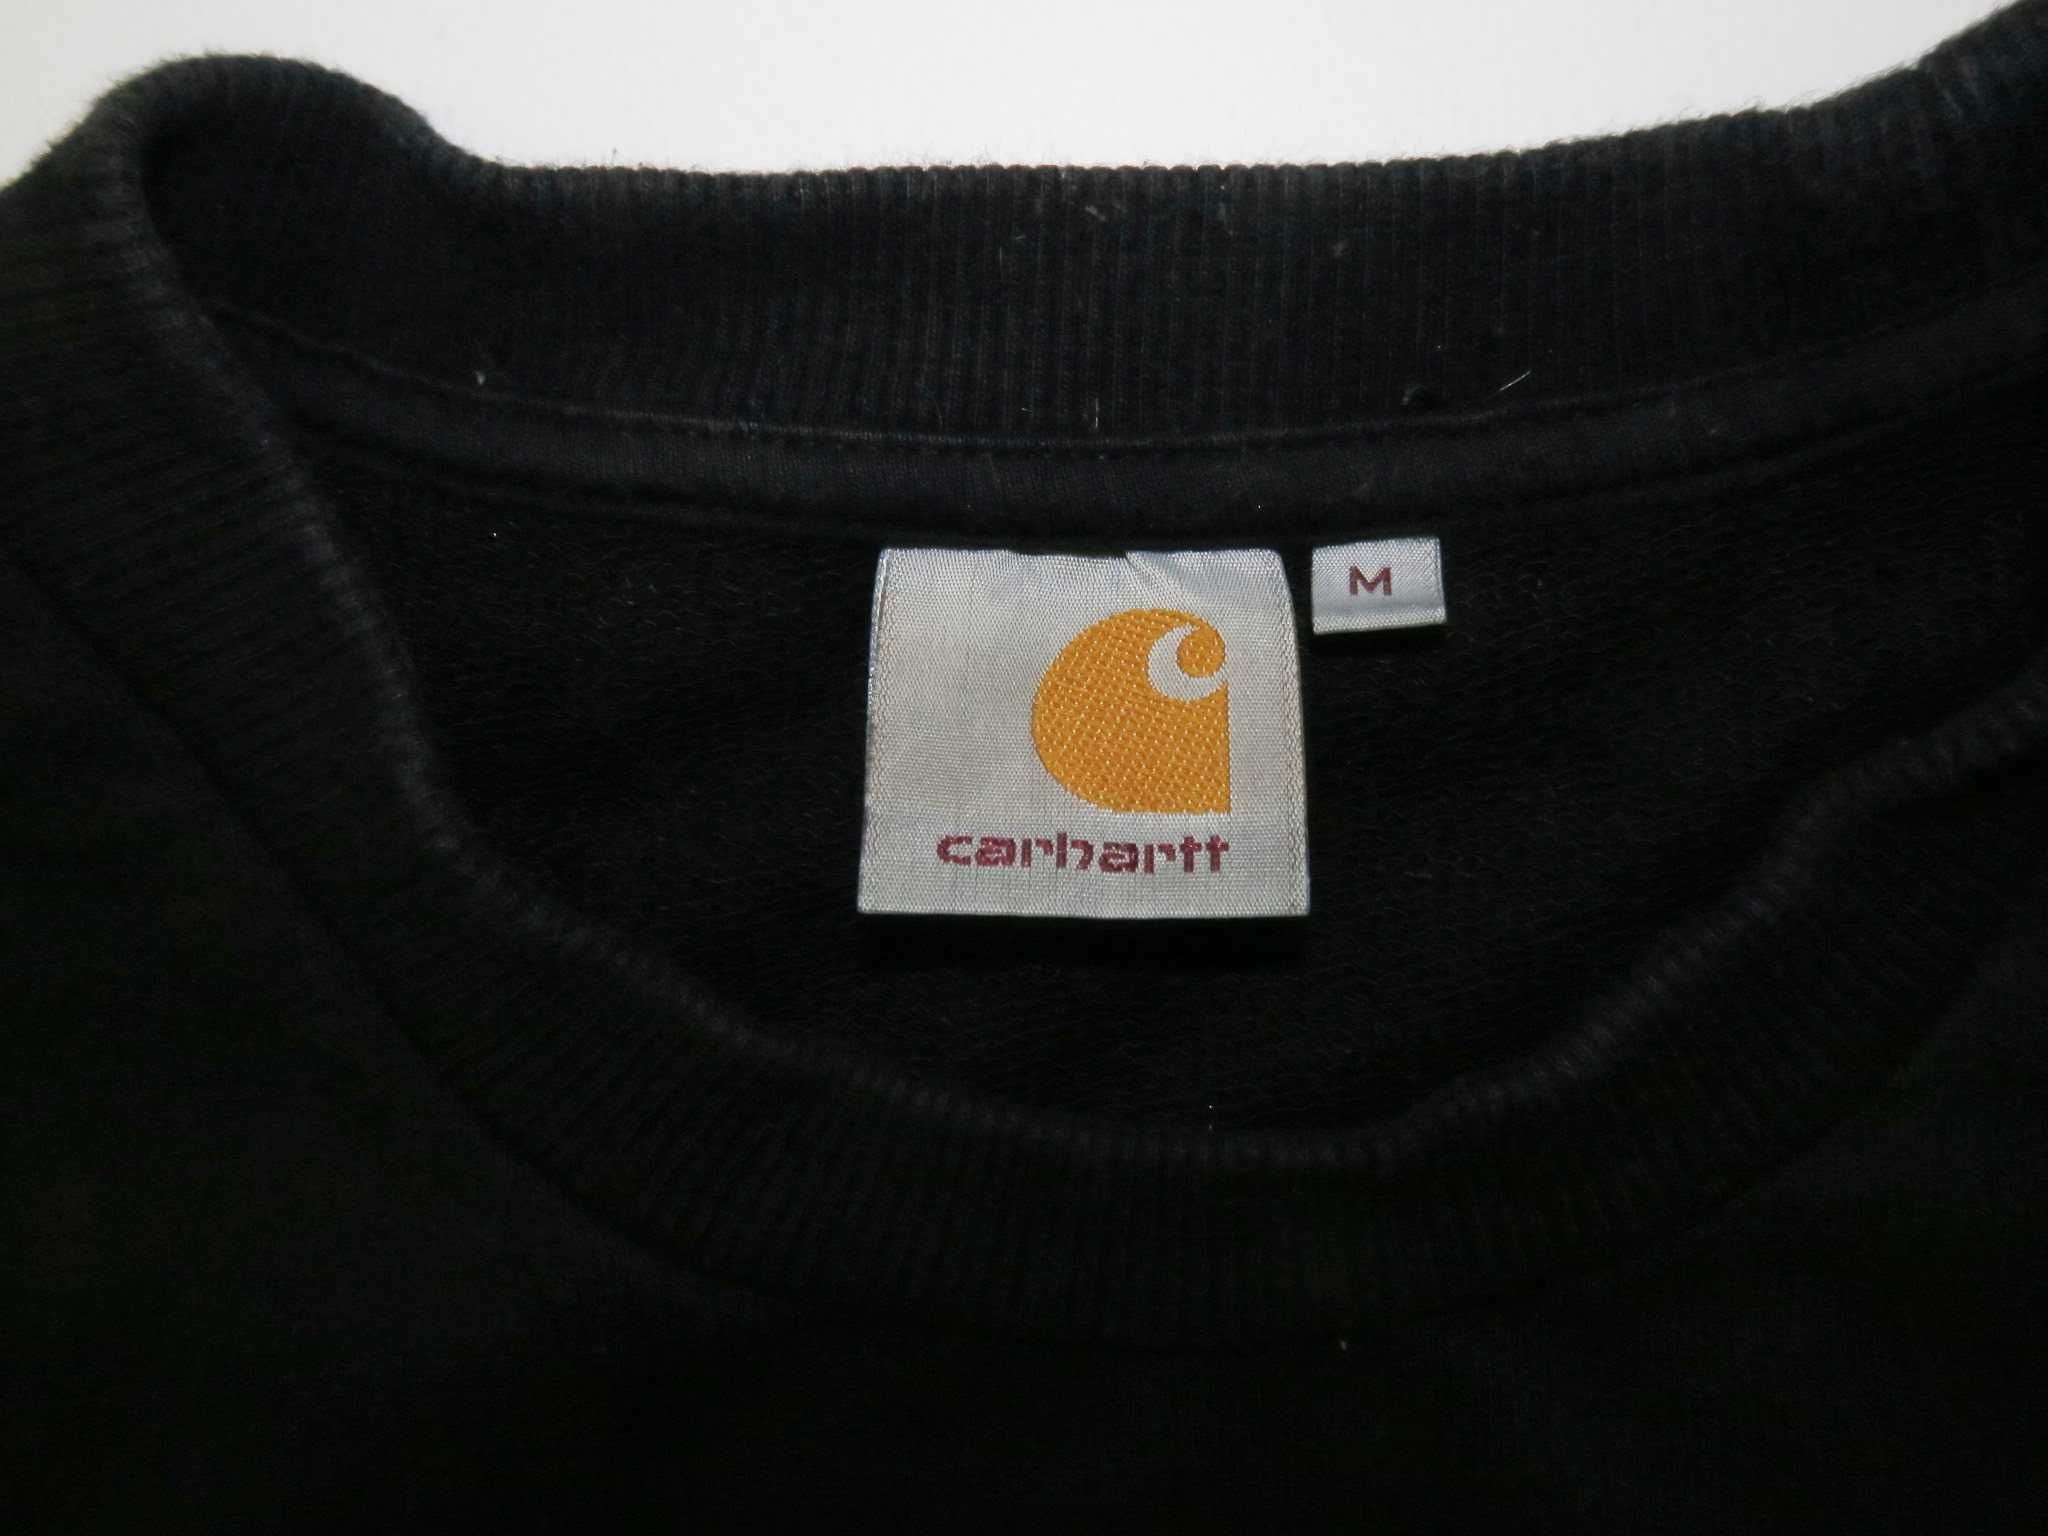 Carhartt bluza crewneck z dużym logo M